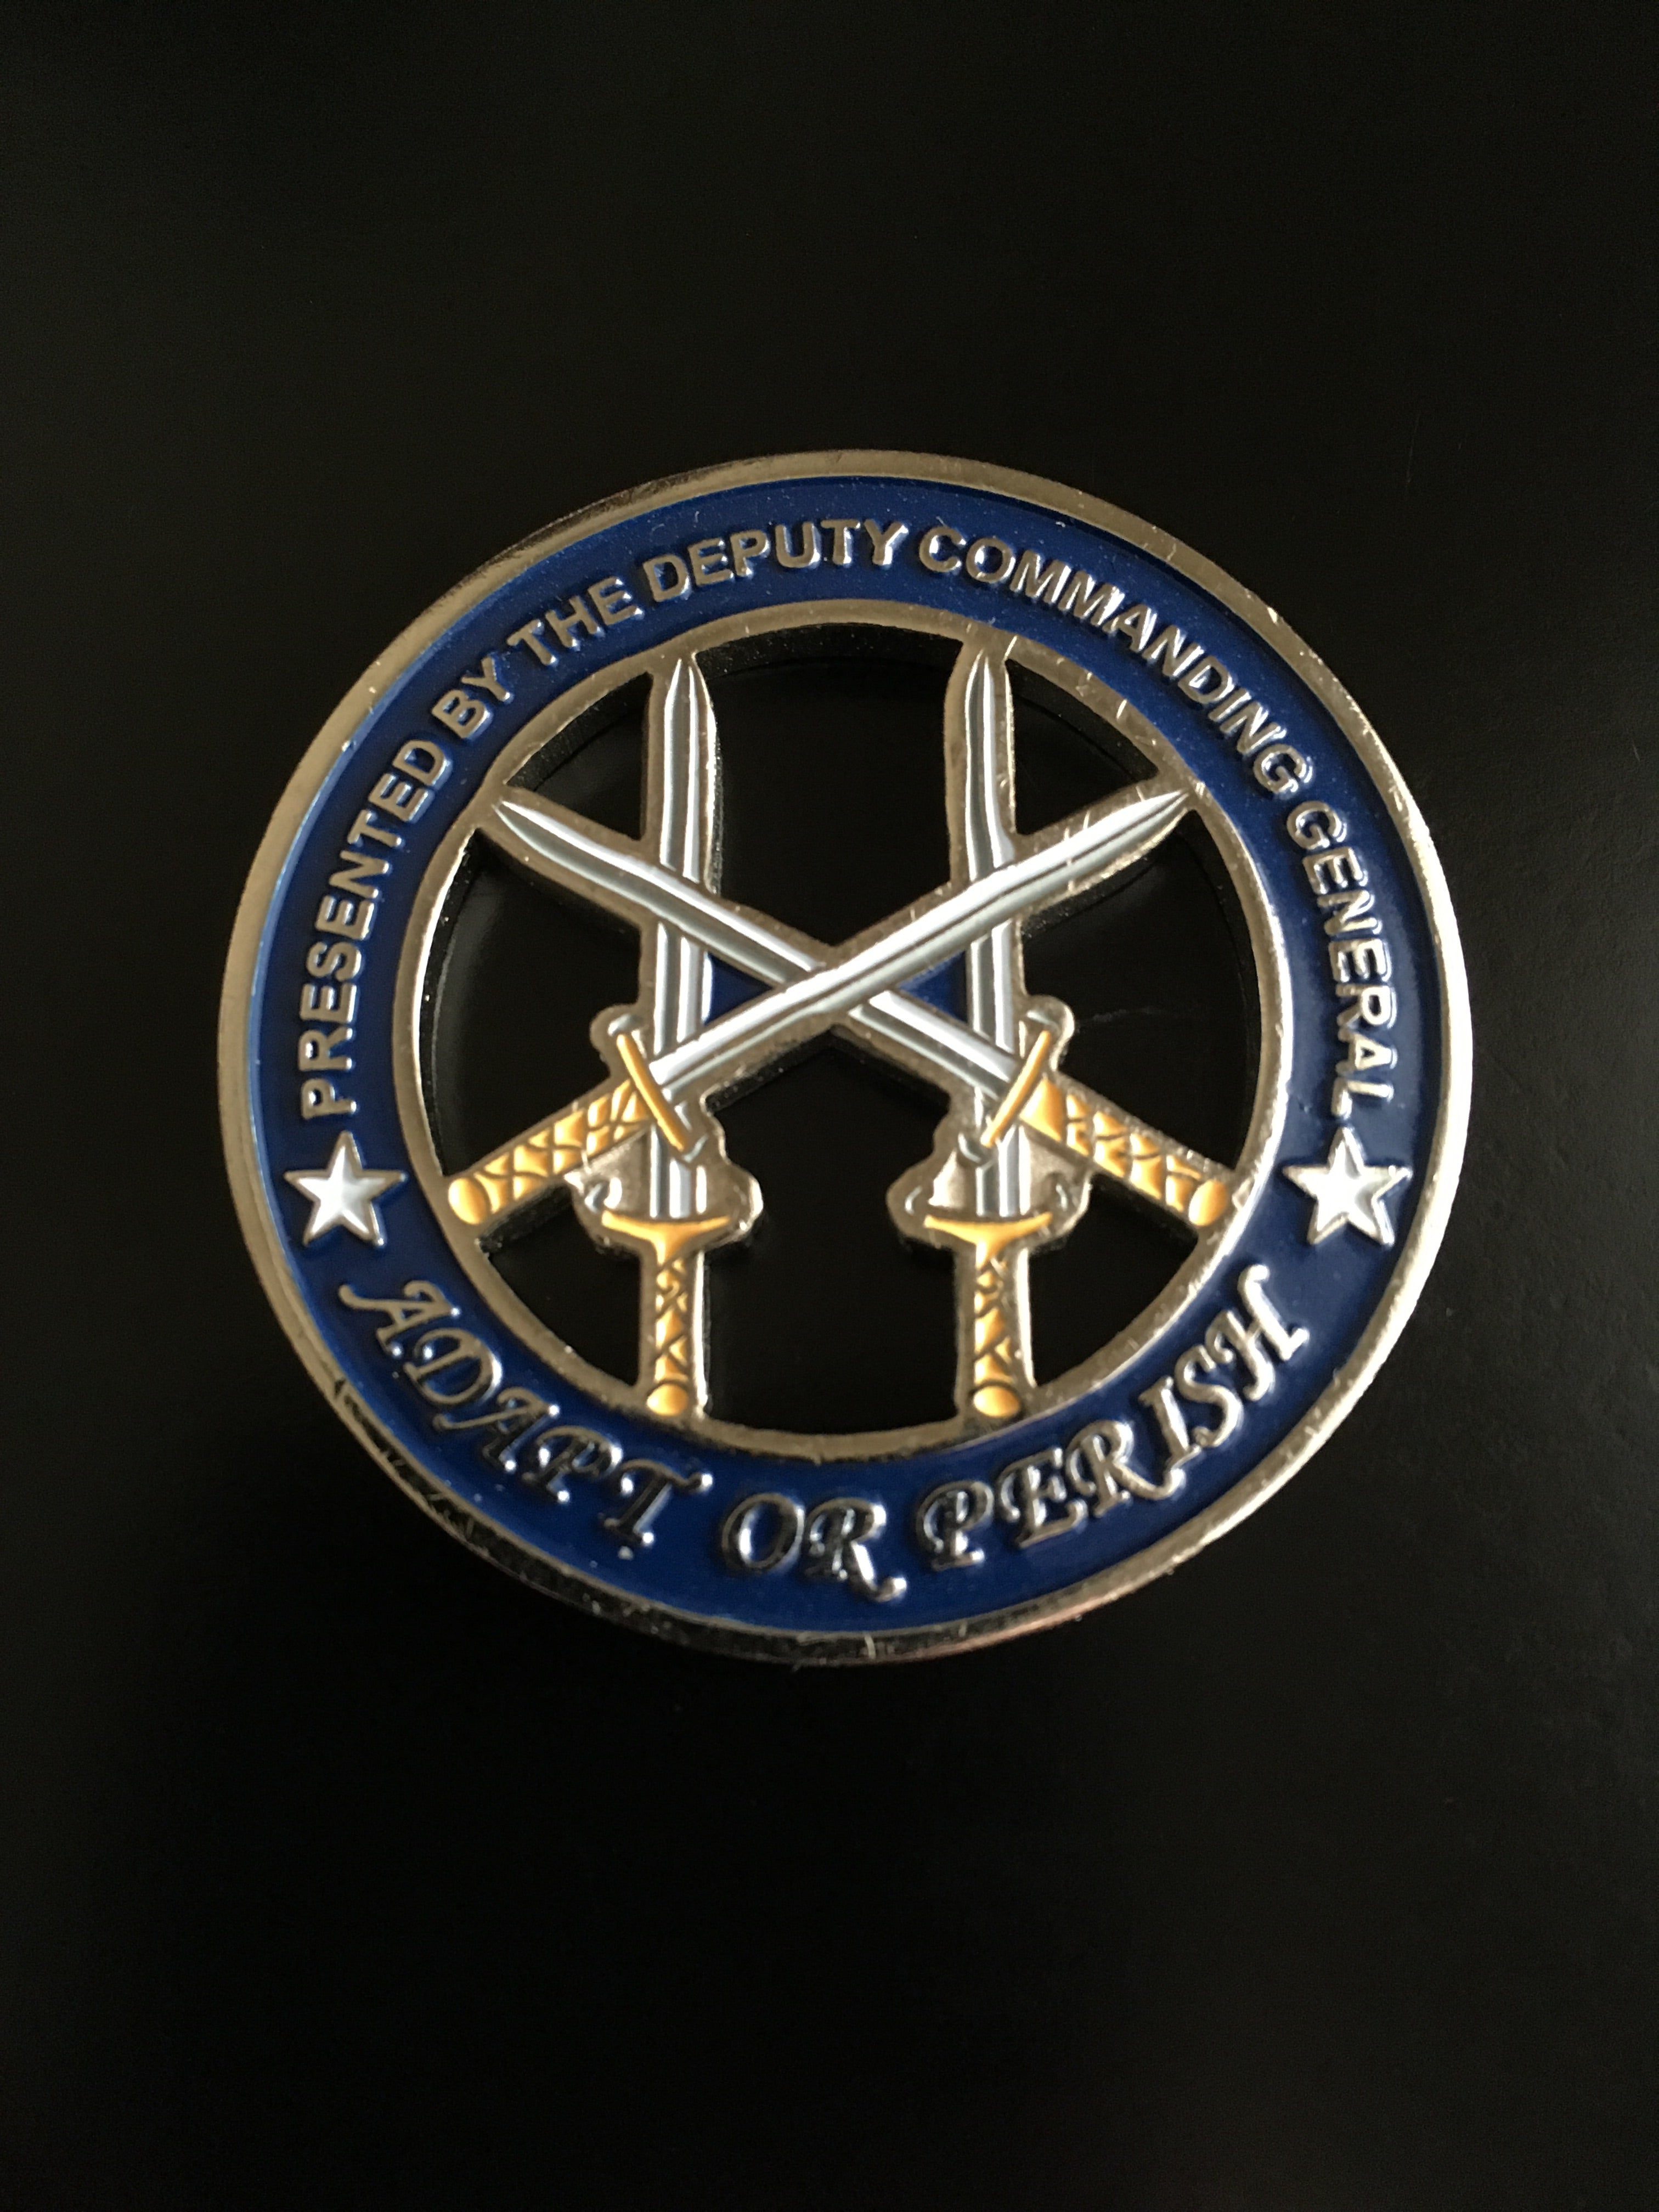 JSOC Deputy Commanding General (Version 2)